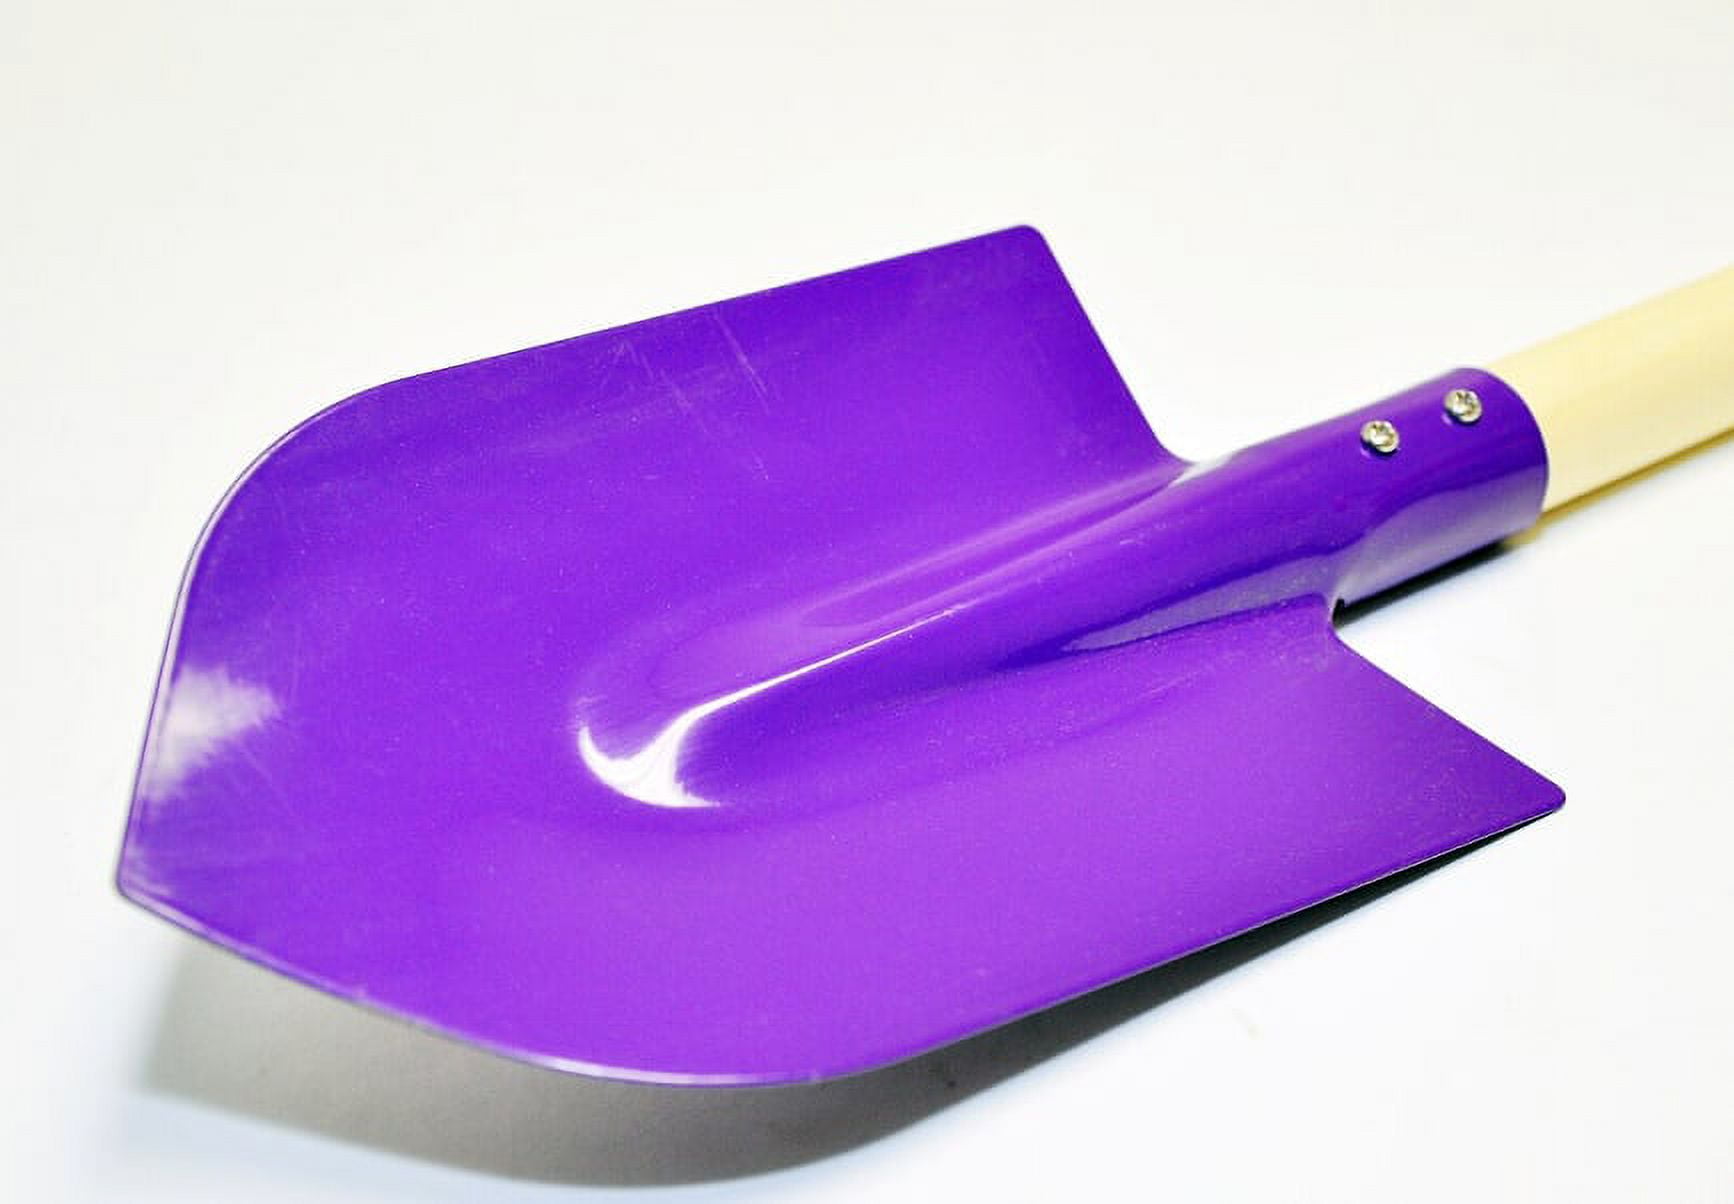 Cloflo 5-piece Garden Tool Set With Purple Carrying Case